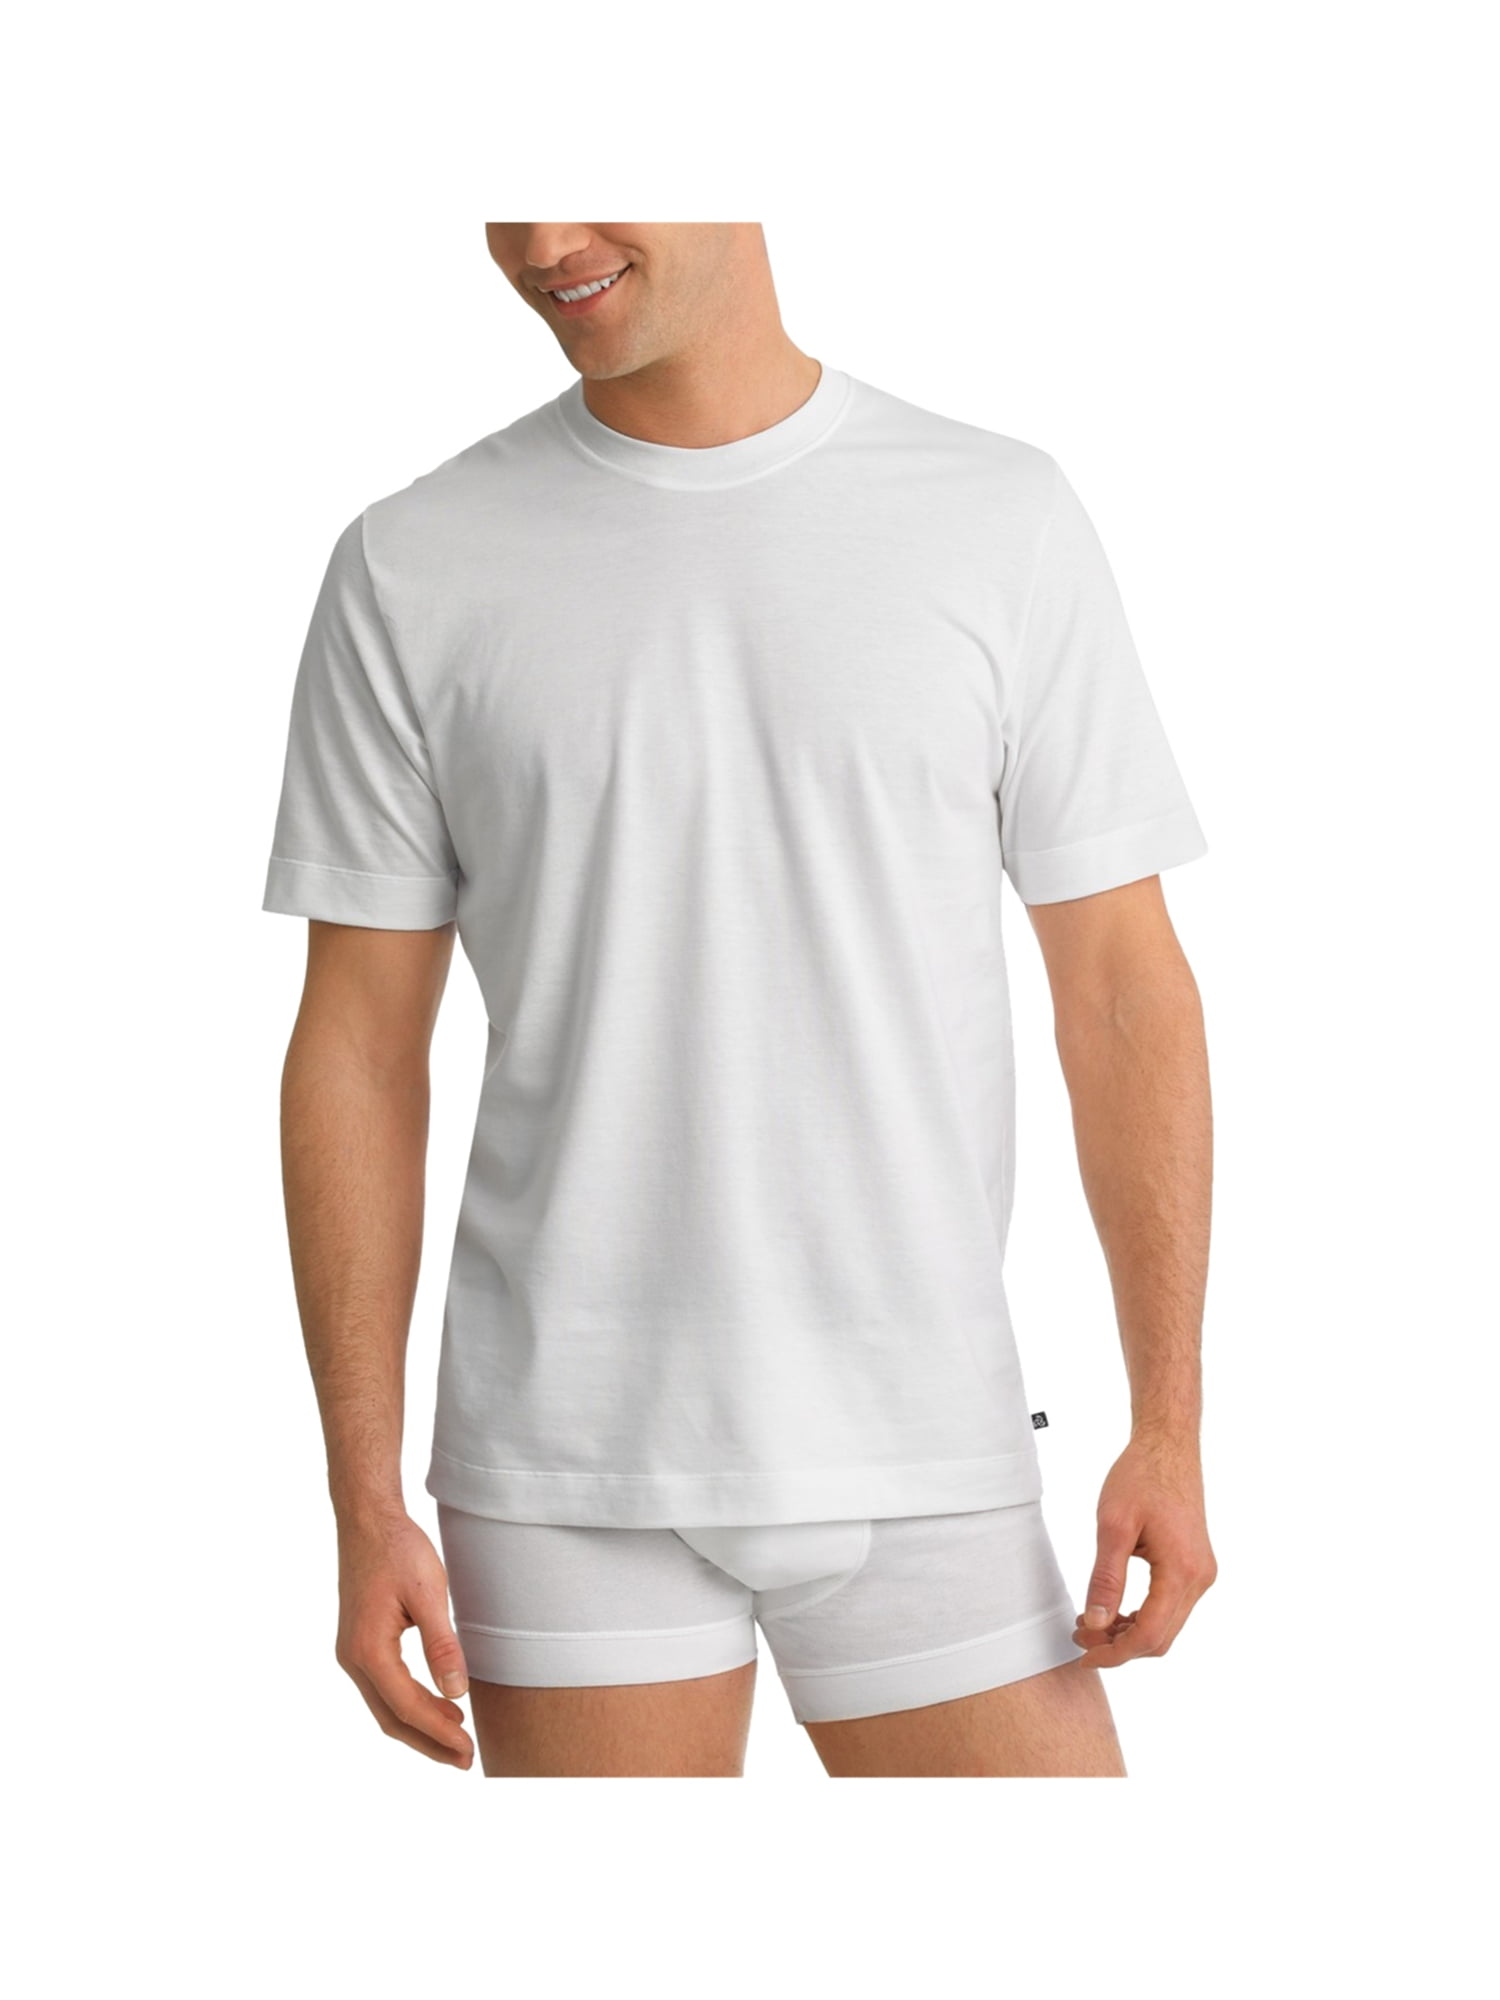 Jockey Mens Staycool Basic T-Shirt white M | Walmart Canada